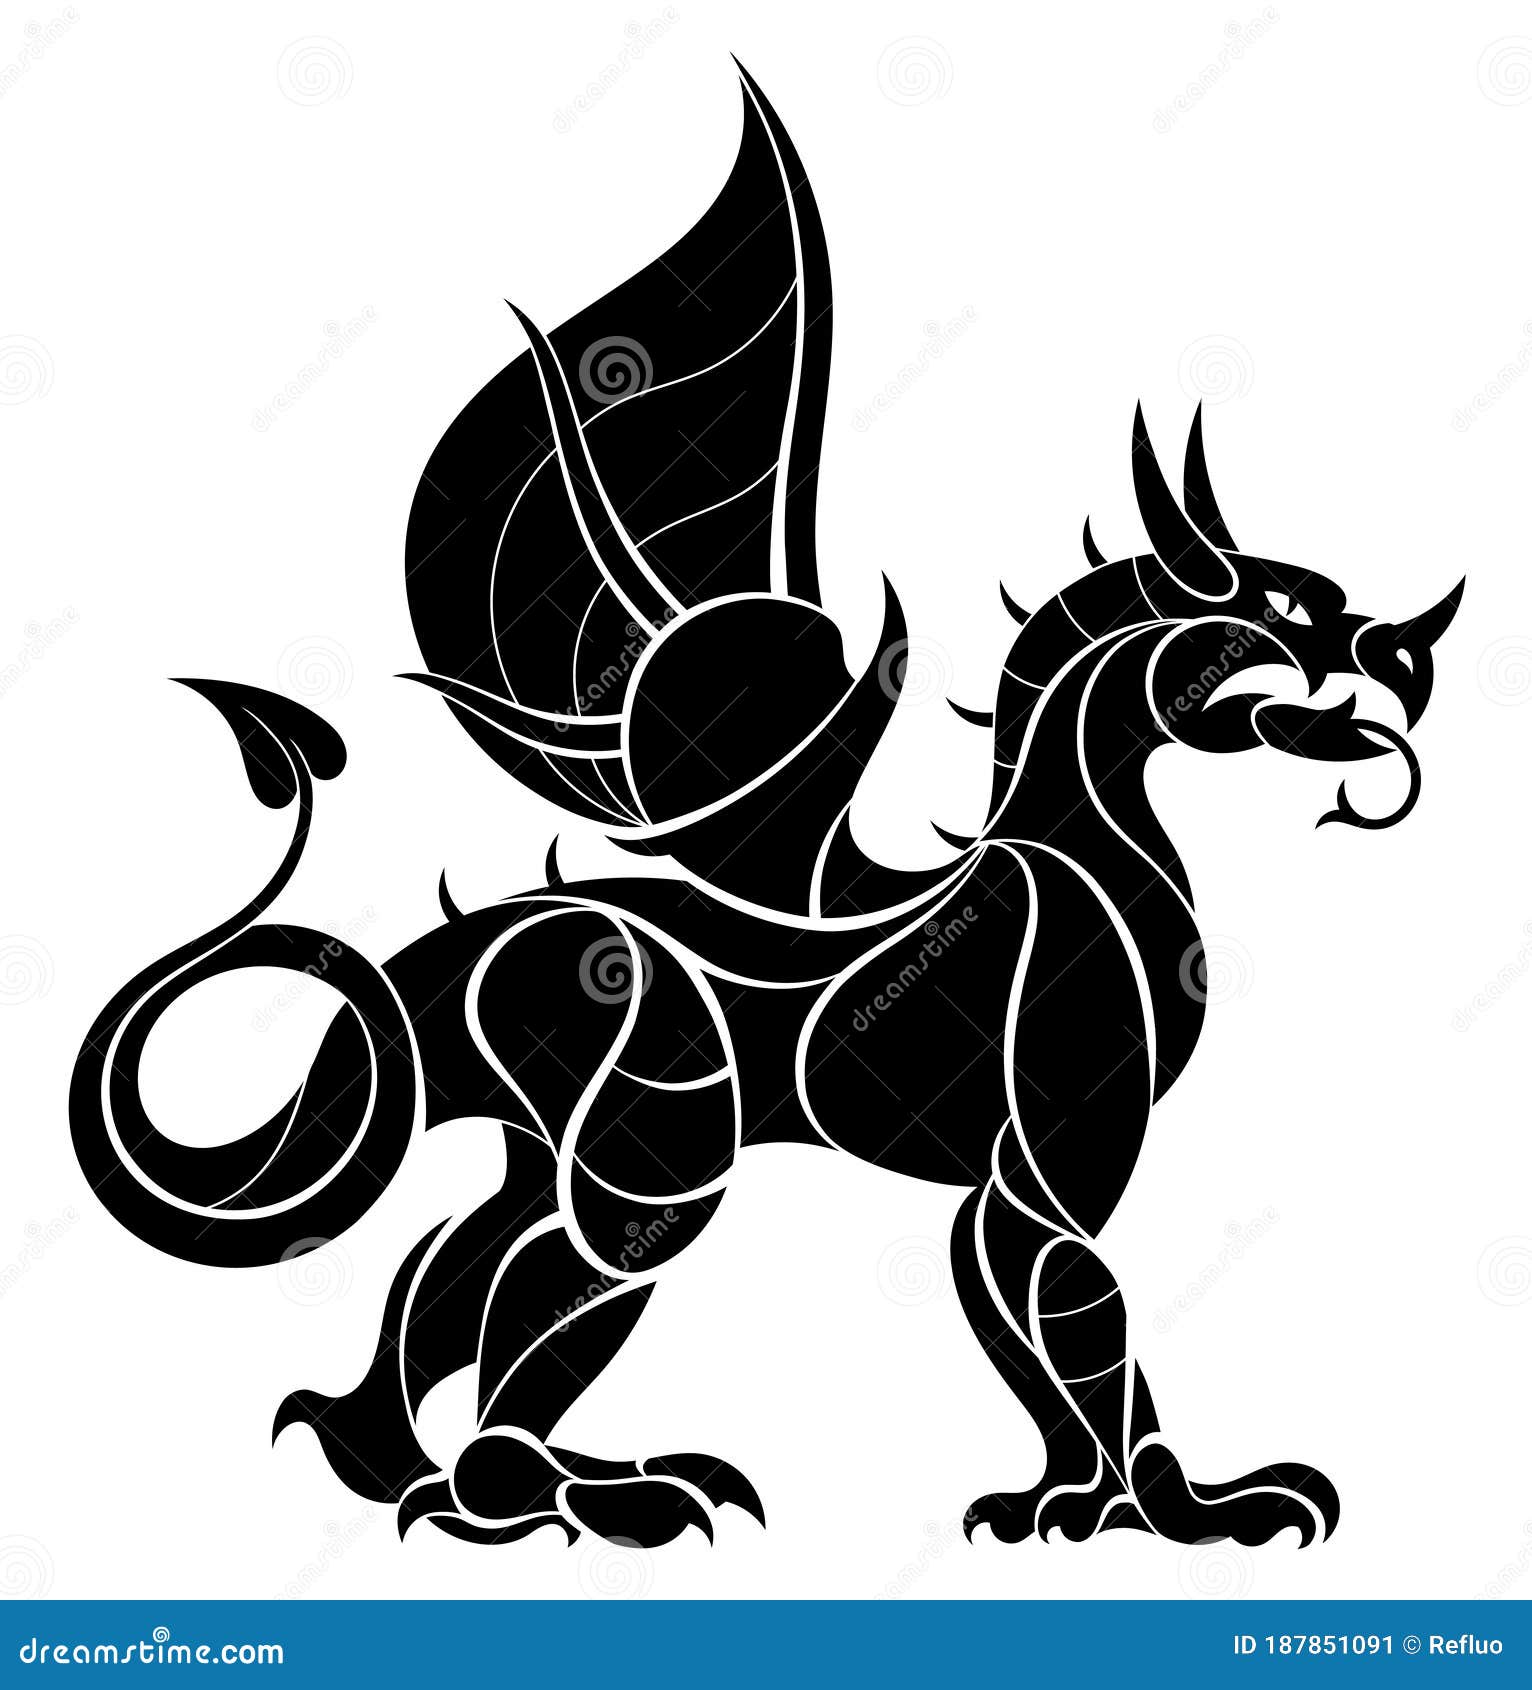 Dragon decorative black stock vector. Illustration of heraldry - 187851091